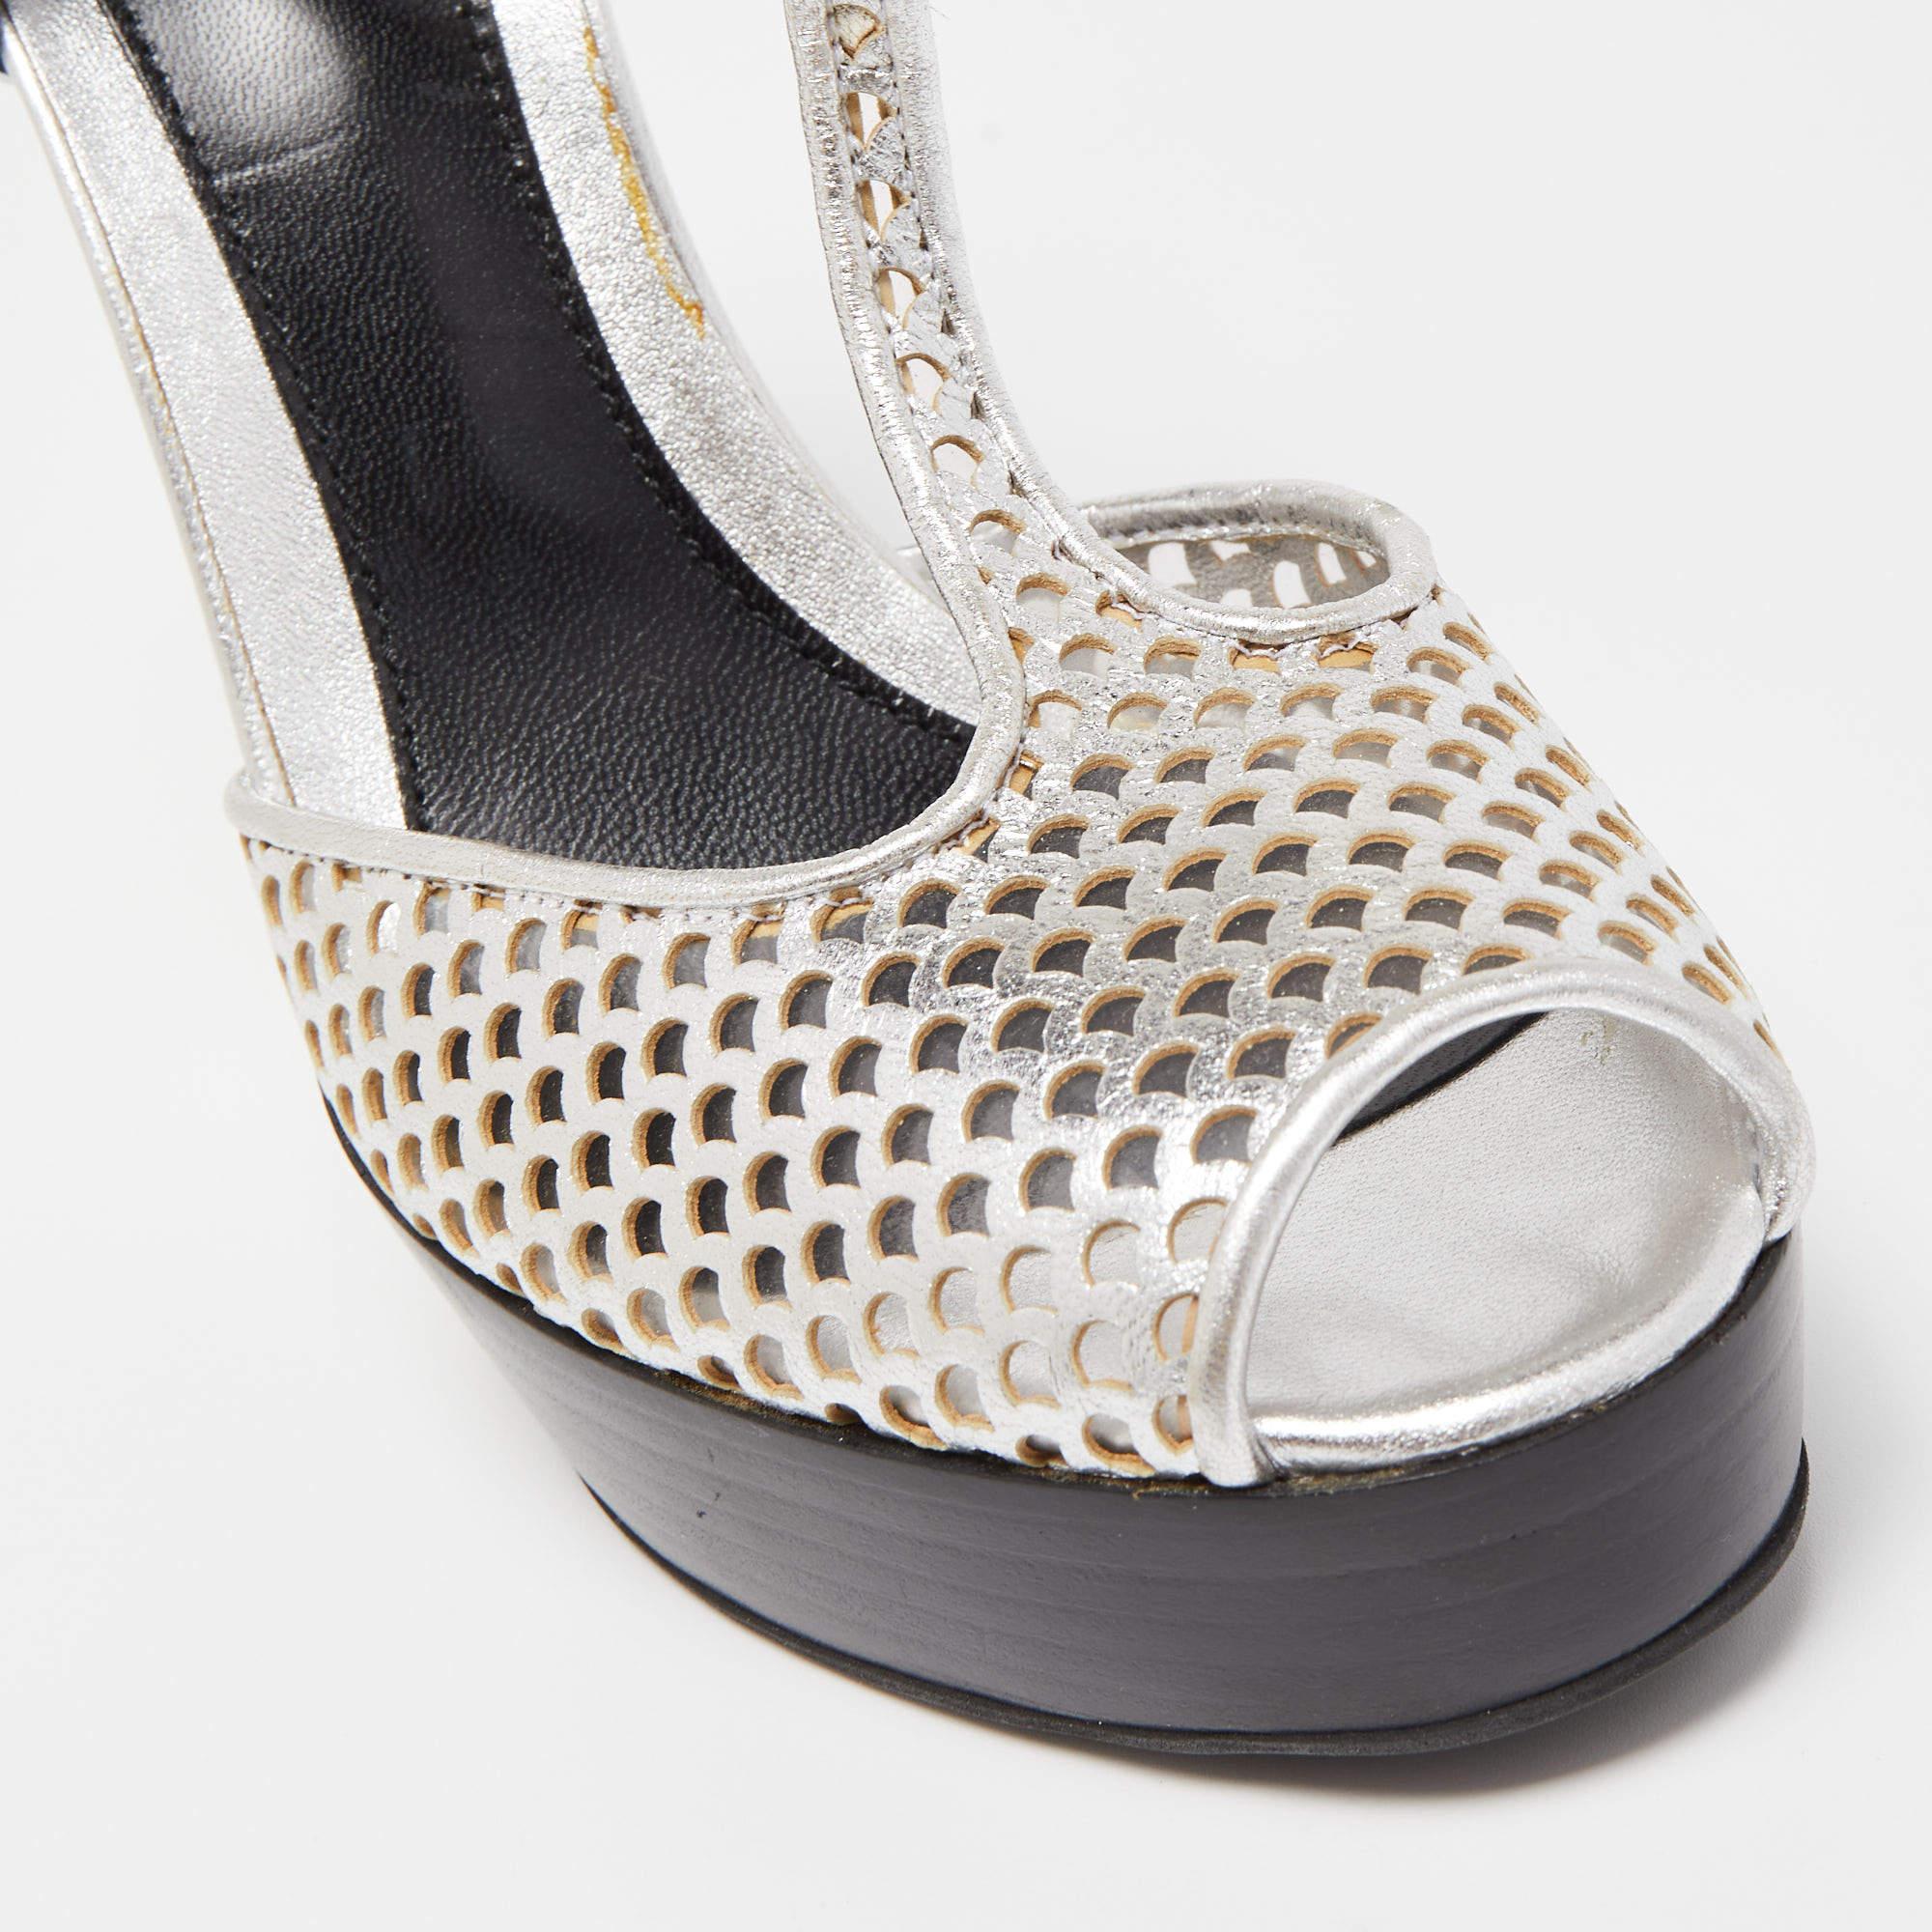 Fendi Metallic Silver Laser Leather T-Strap Peep Toe Platform Sandals Size 40 1